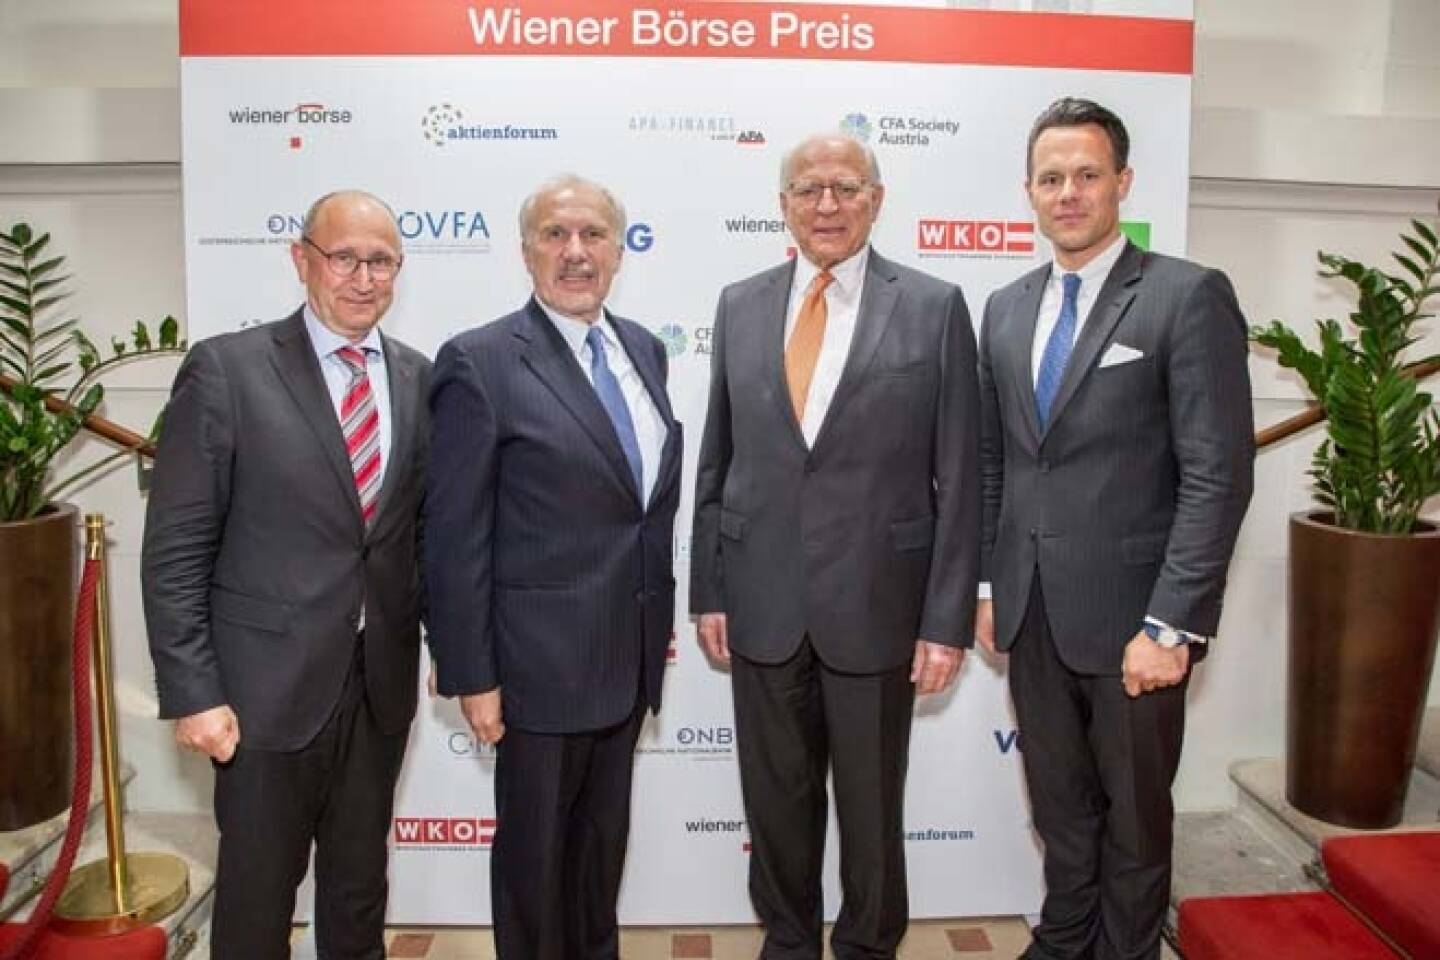 Wiener Börse-Vorstand Ludwig Nießen, Ewald Nowotny, Claus Raidl (beide OeNB), Börse-CEO Christoph Boschan; Credit: APA-Fotoservice